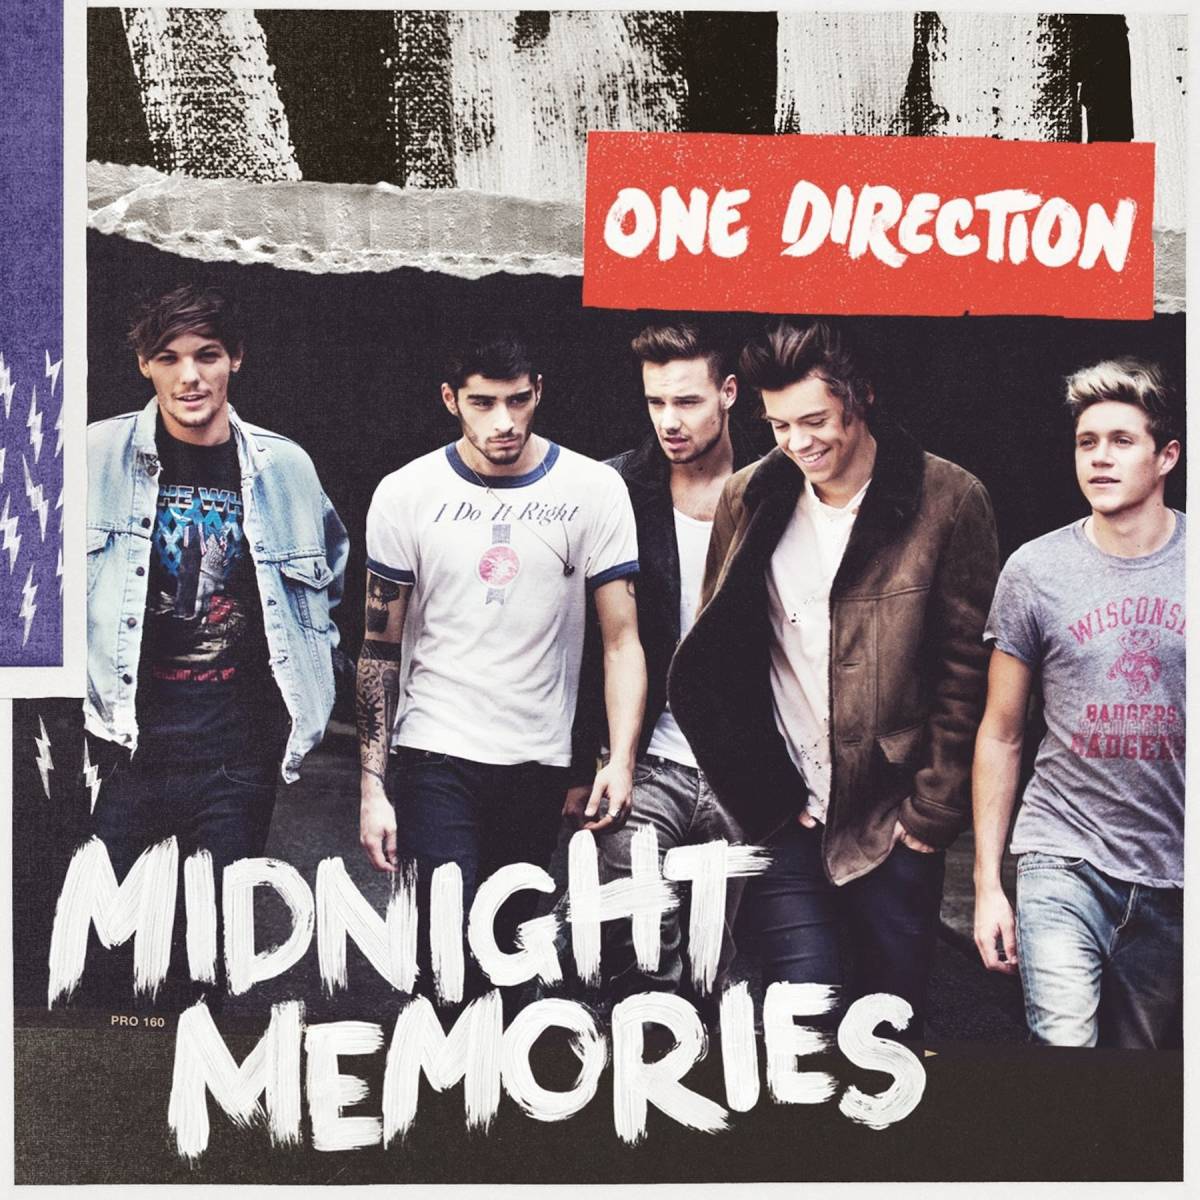 Midnight Memories 是流行的盎格鲁-爱尔兰男孩乐队 One Direction 的第三个工作室作品。